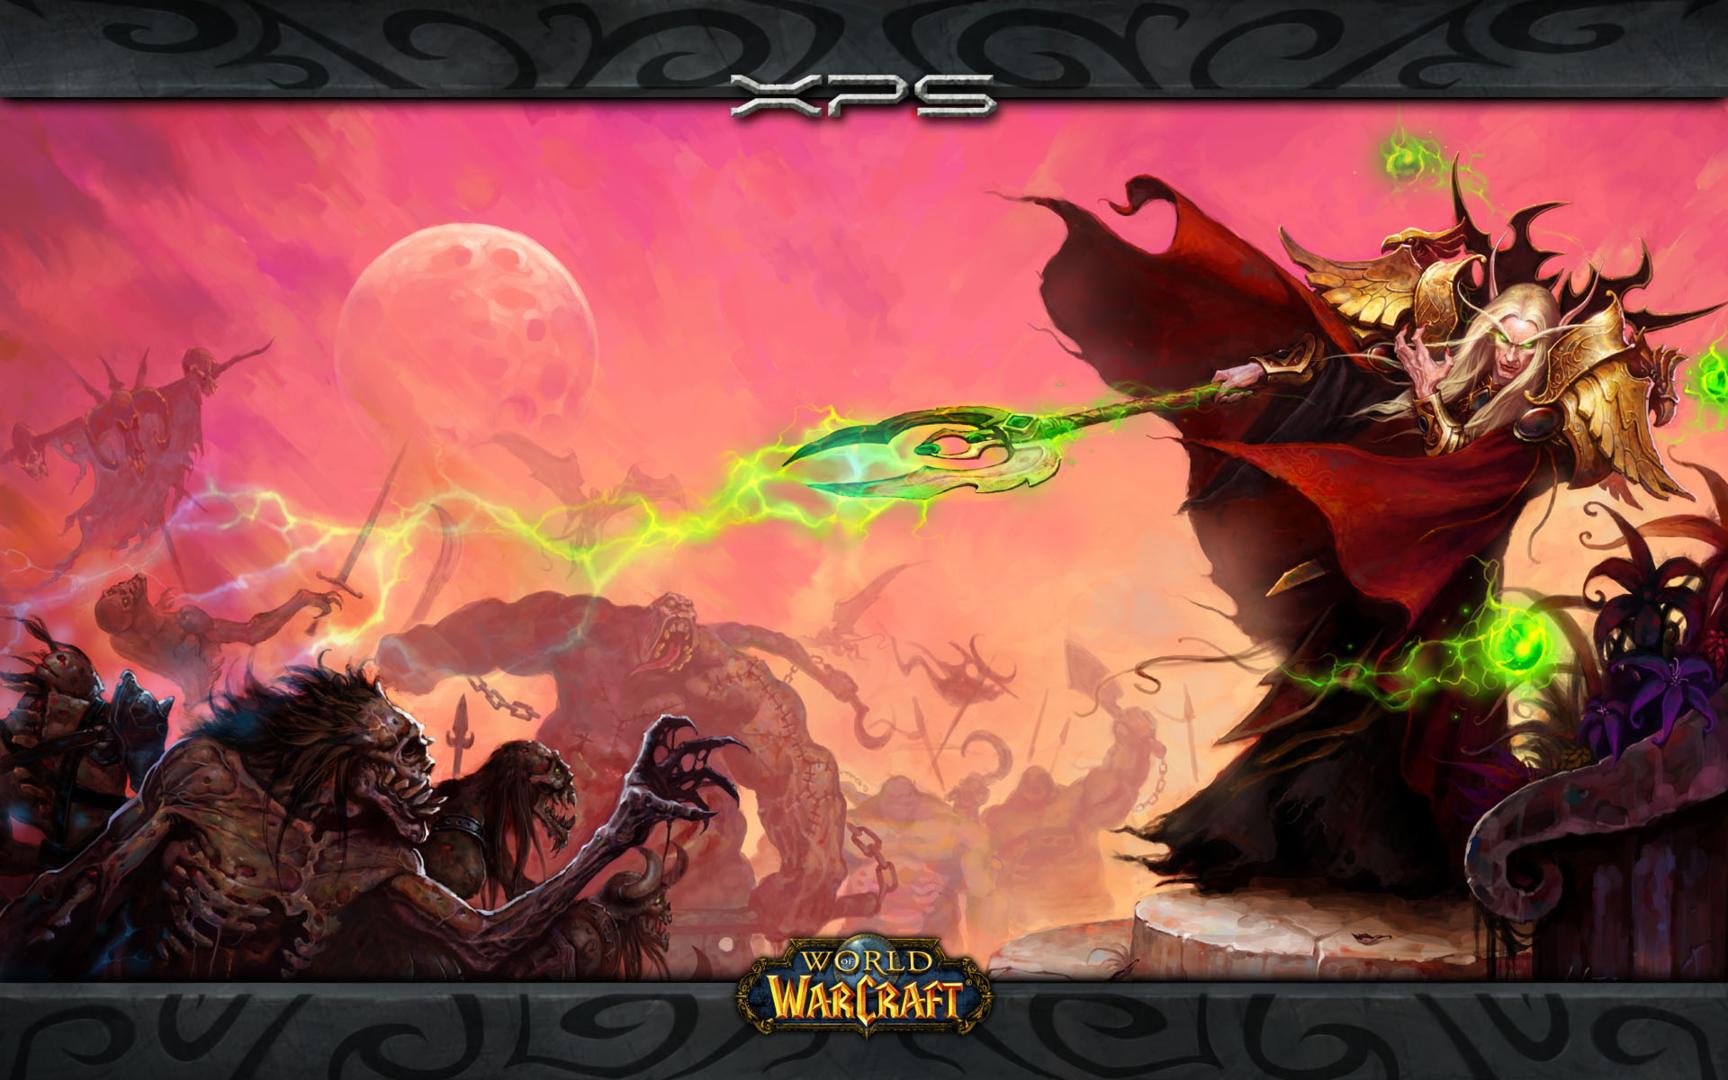 Fantasy warrior amidst a fiery battleground, featuring the World of Warcraft blood elf amidst the sunwell.